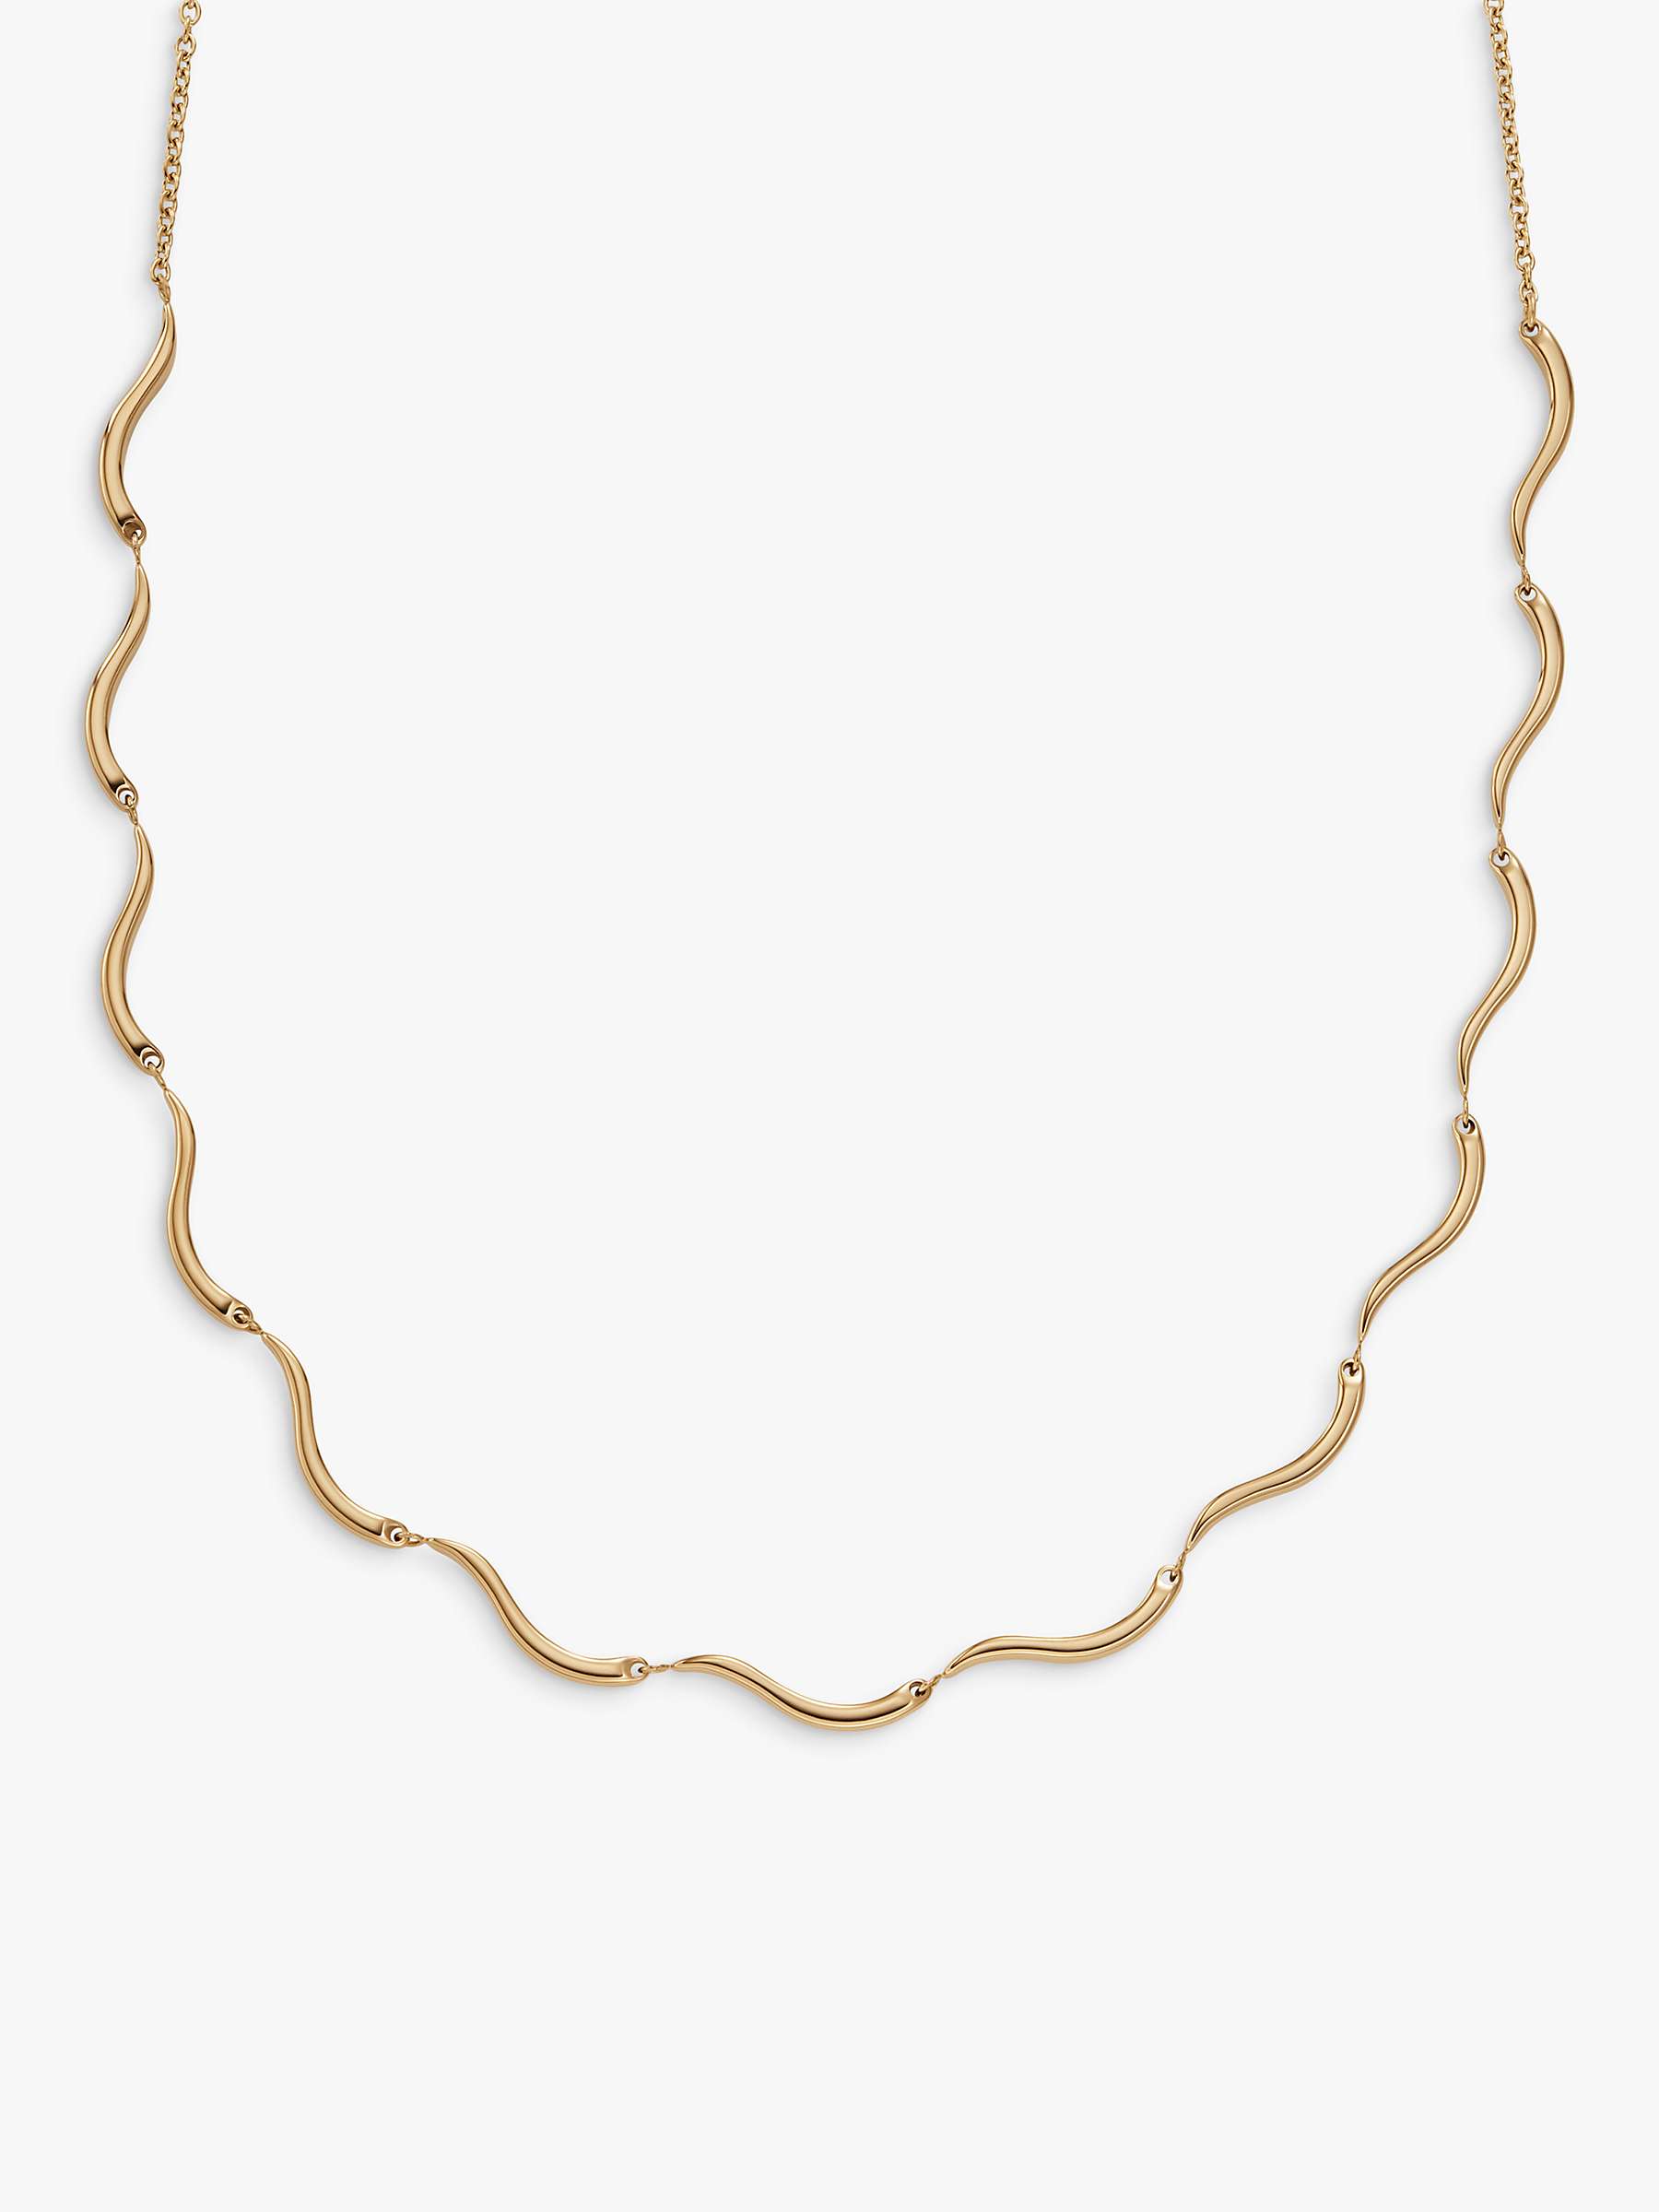 Buy Skagen Wave Chain Necklace, Gold Online at johnlewis.com